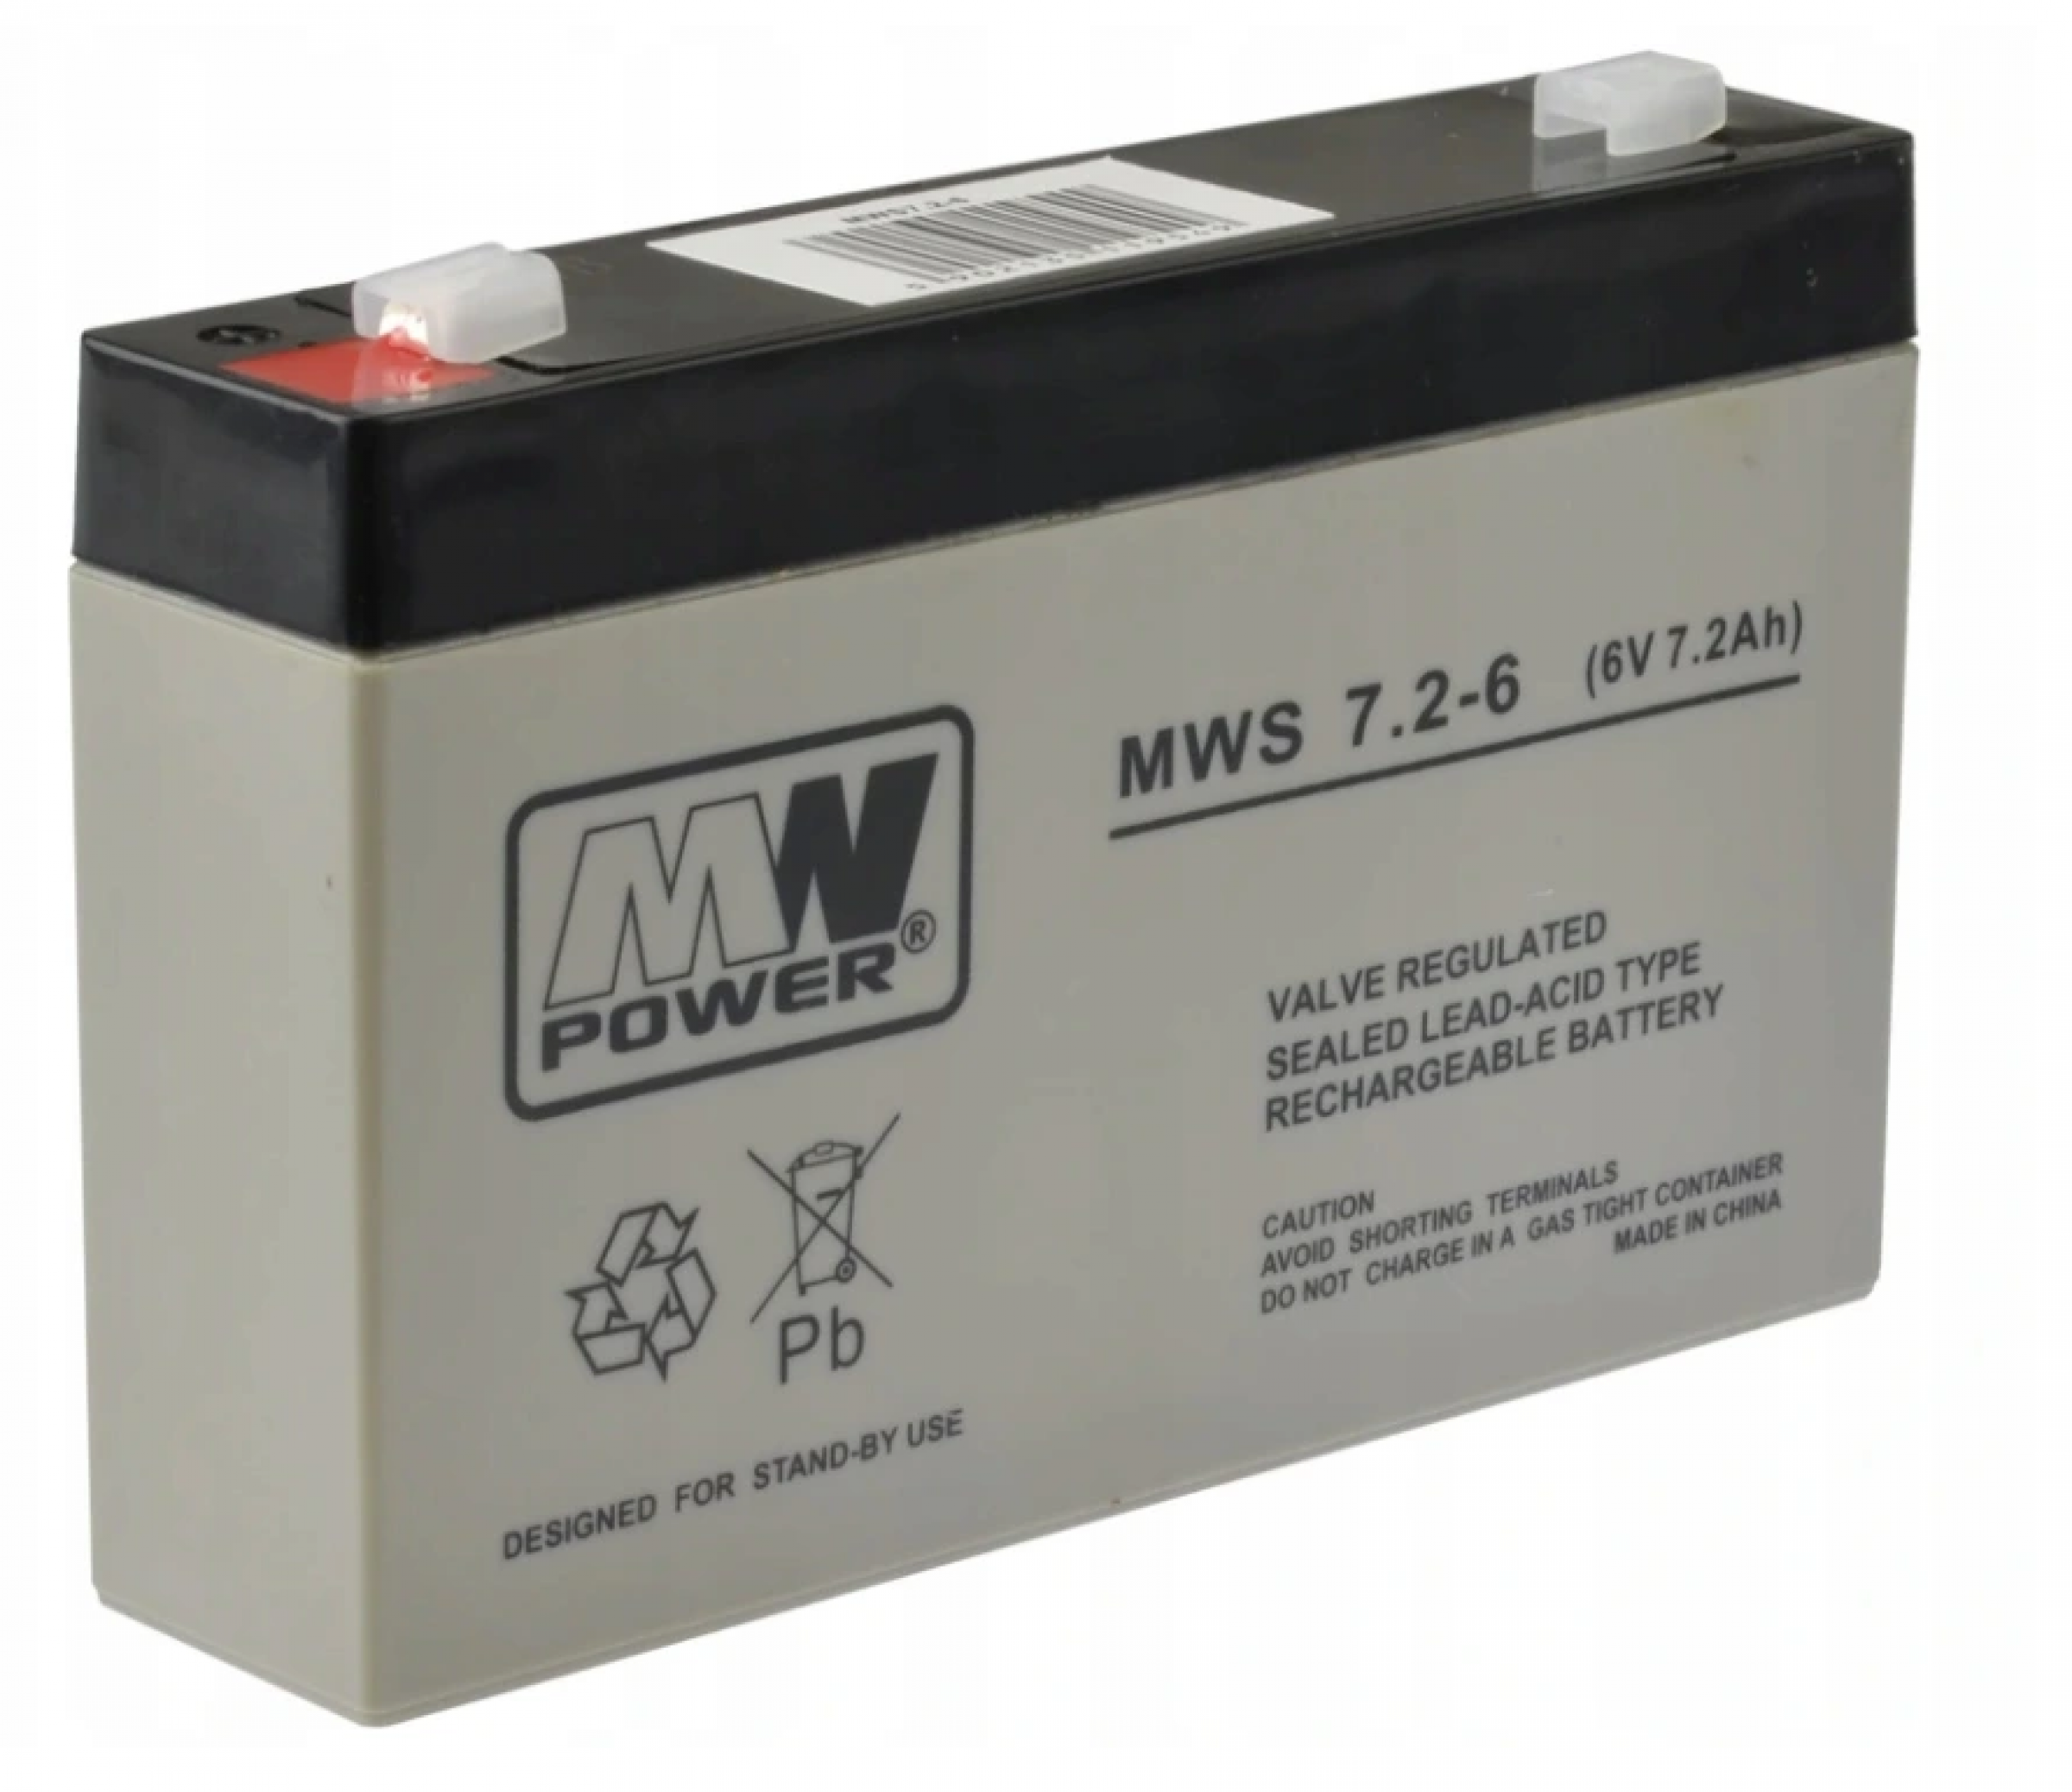 OEM lead battery MP7-6 [6V 7Ah] MWS7.2-6 standby 151x34x100